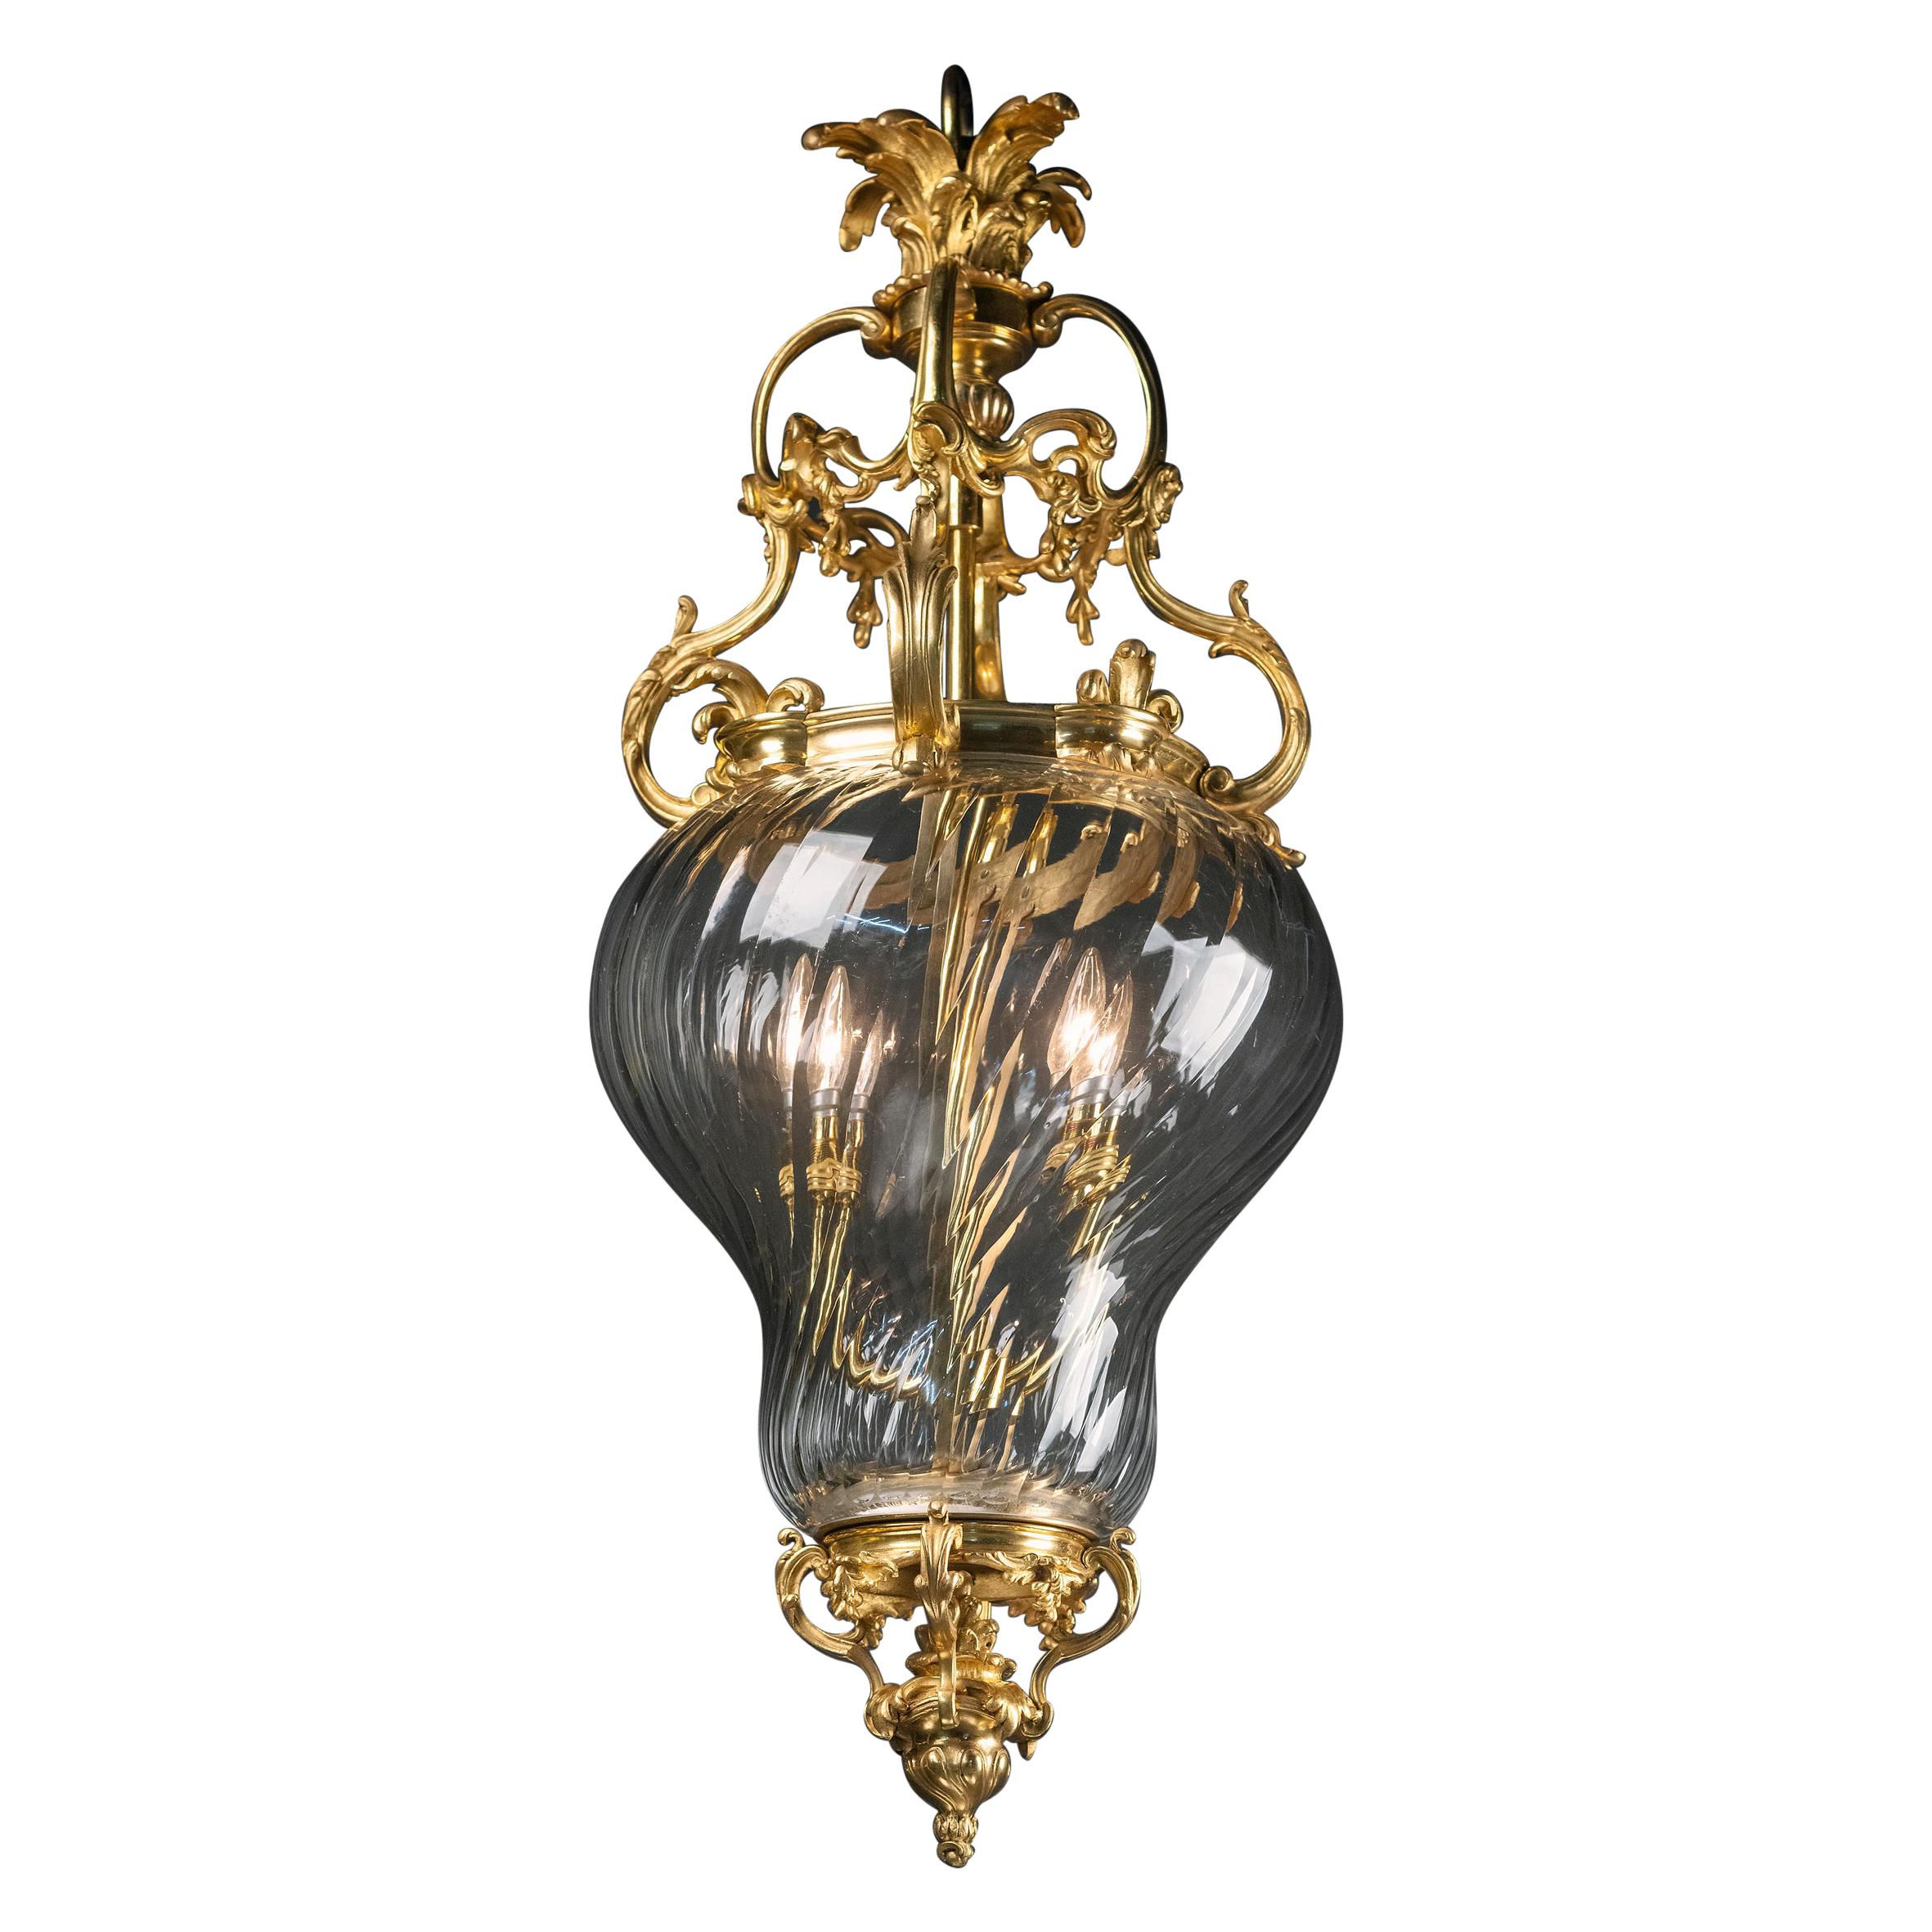 Gilt-Bronze and Spiral Moulded Glass Lantern Attributed to François Linke